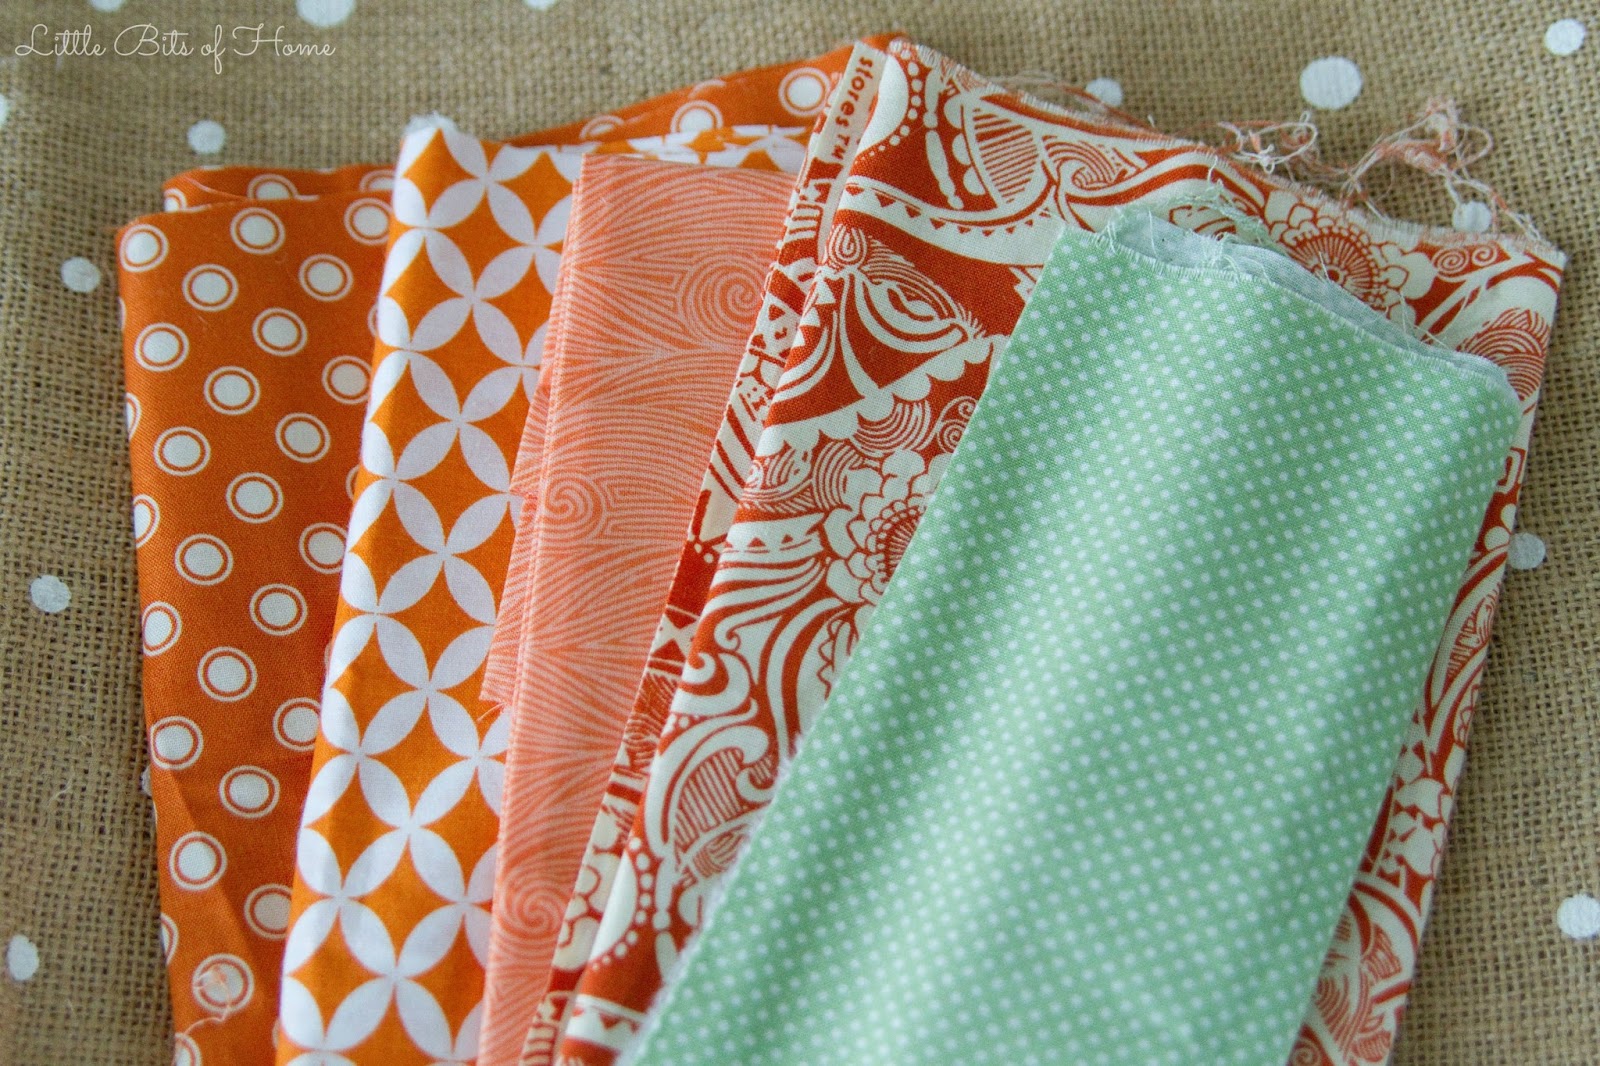 Easy No-Sew Fabric Decor Projects - JOANN Fabrics 